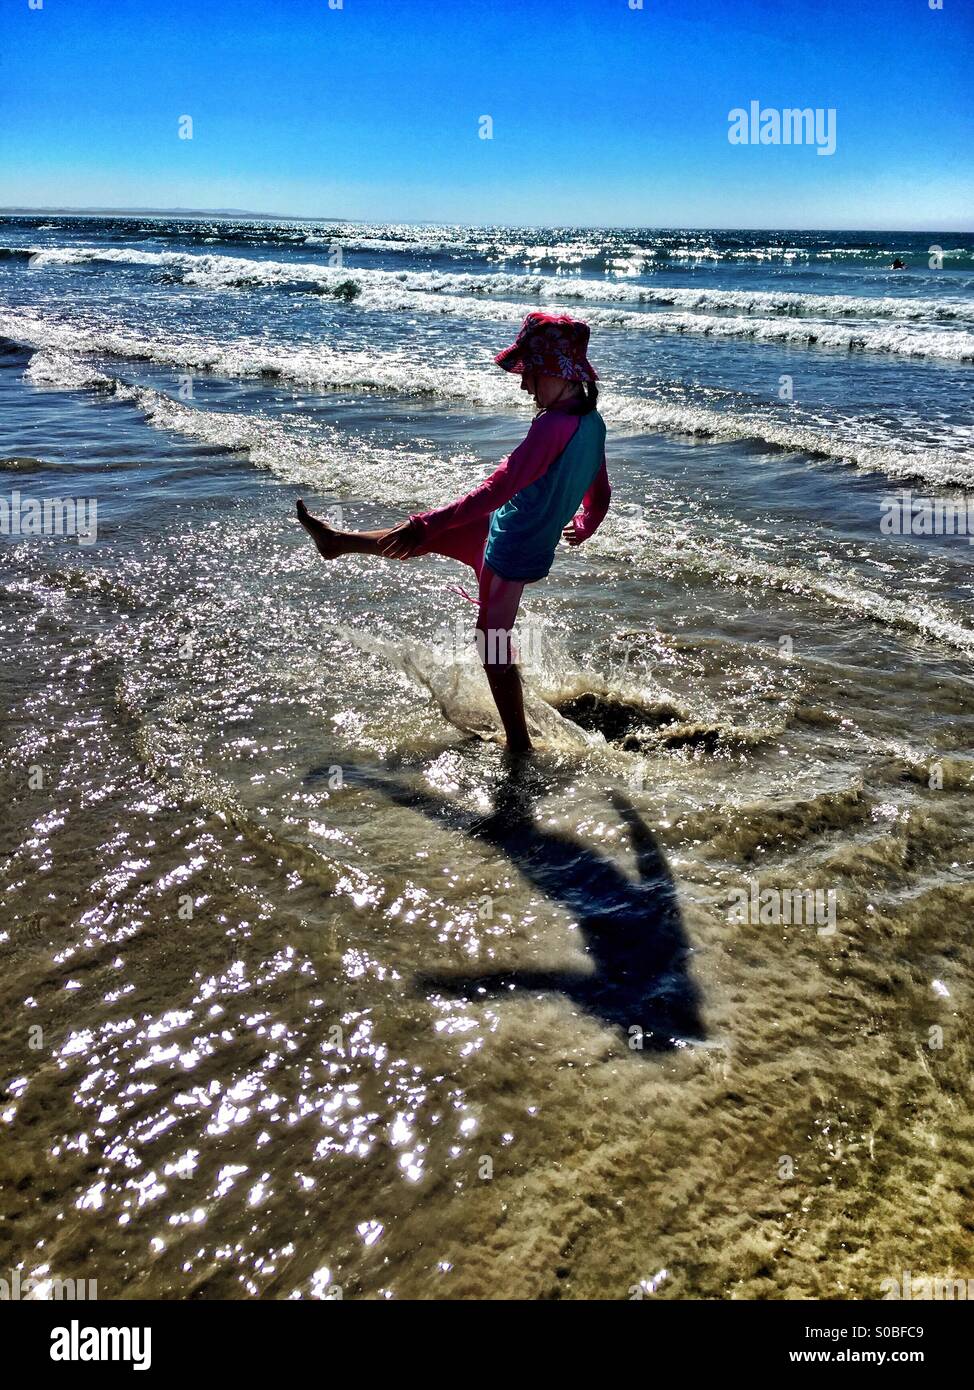 Girl splashing in shallows at the beach Stock Photo